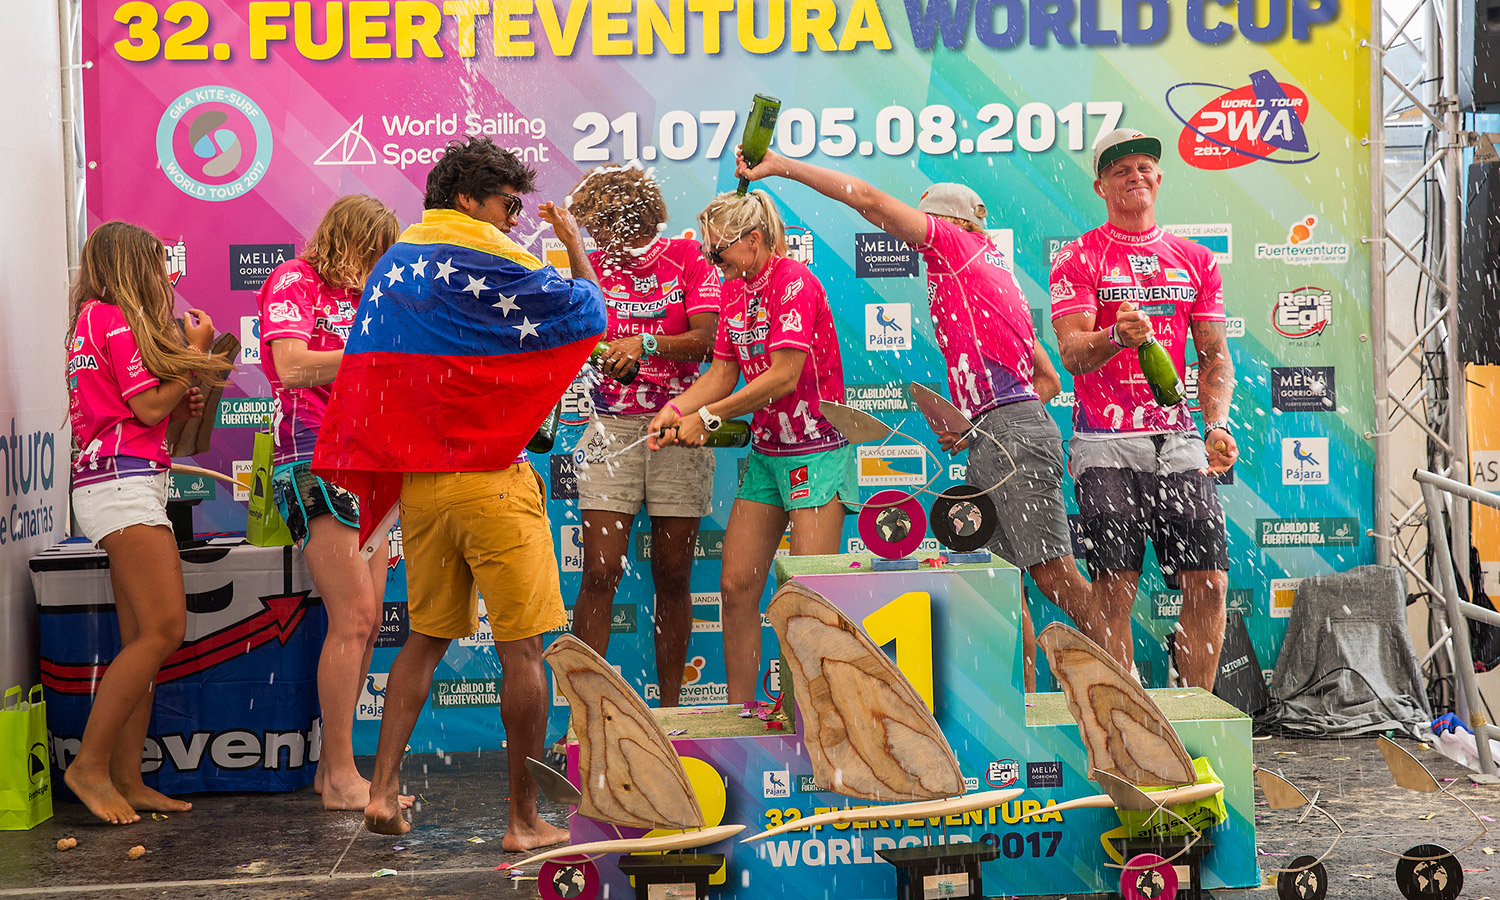 PWA Freestyle World Cup Fuerteventura 2017